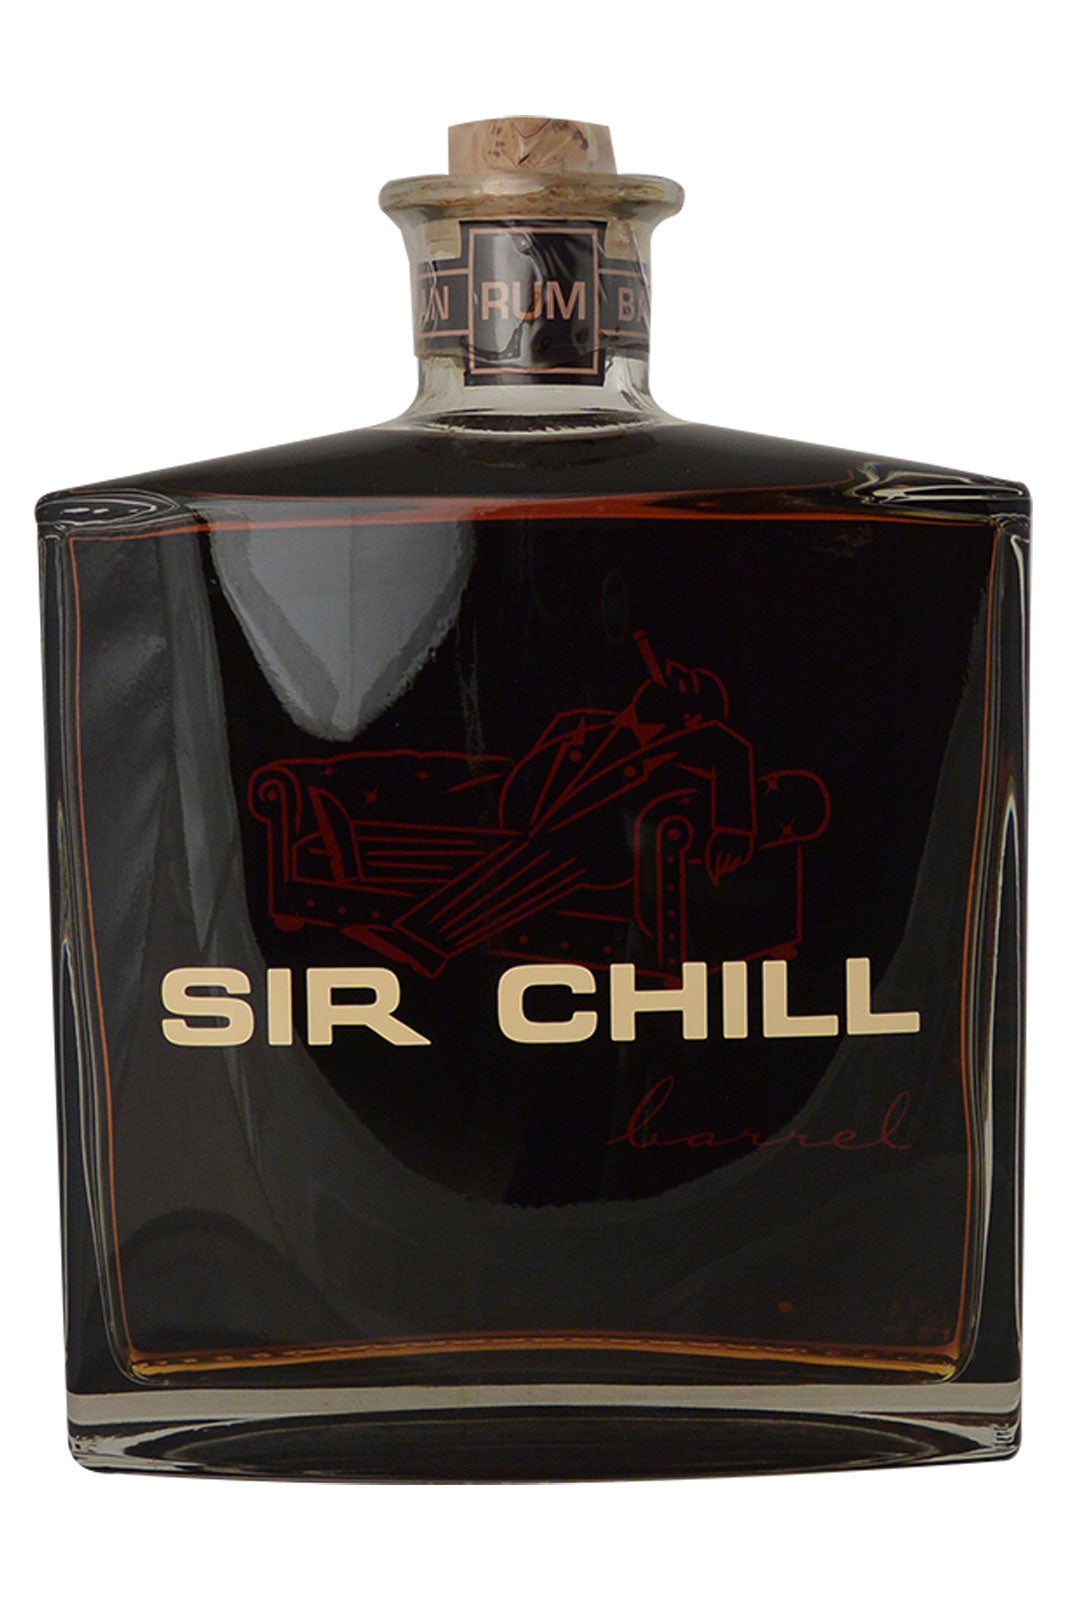 Sir Chill Barrel Rum 1.5 Litre